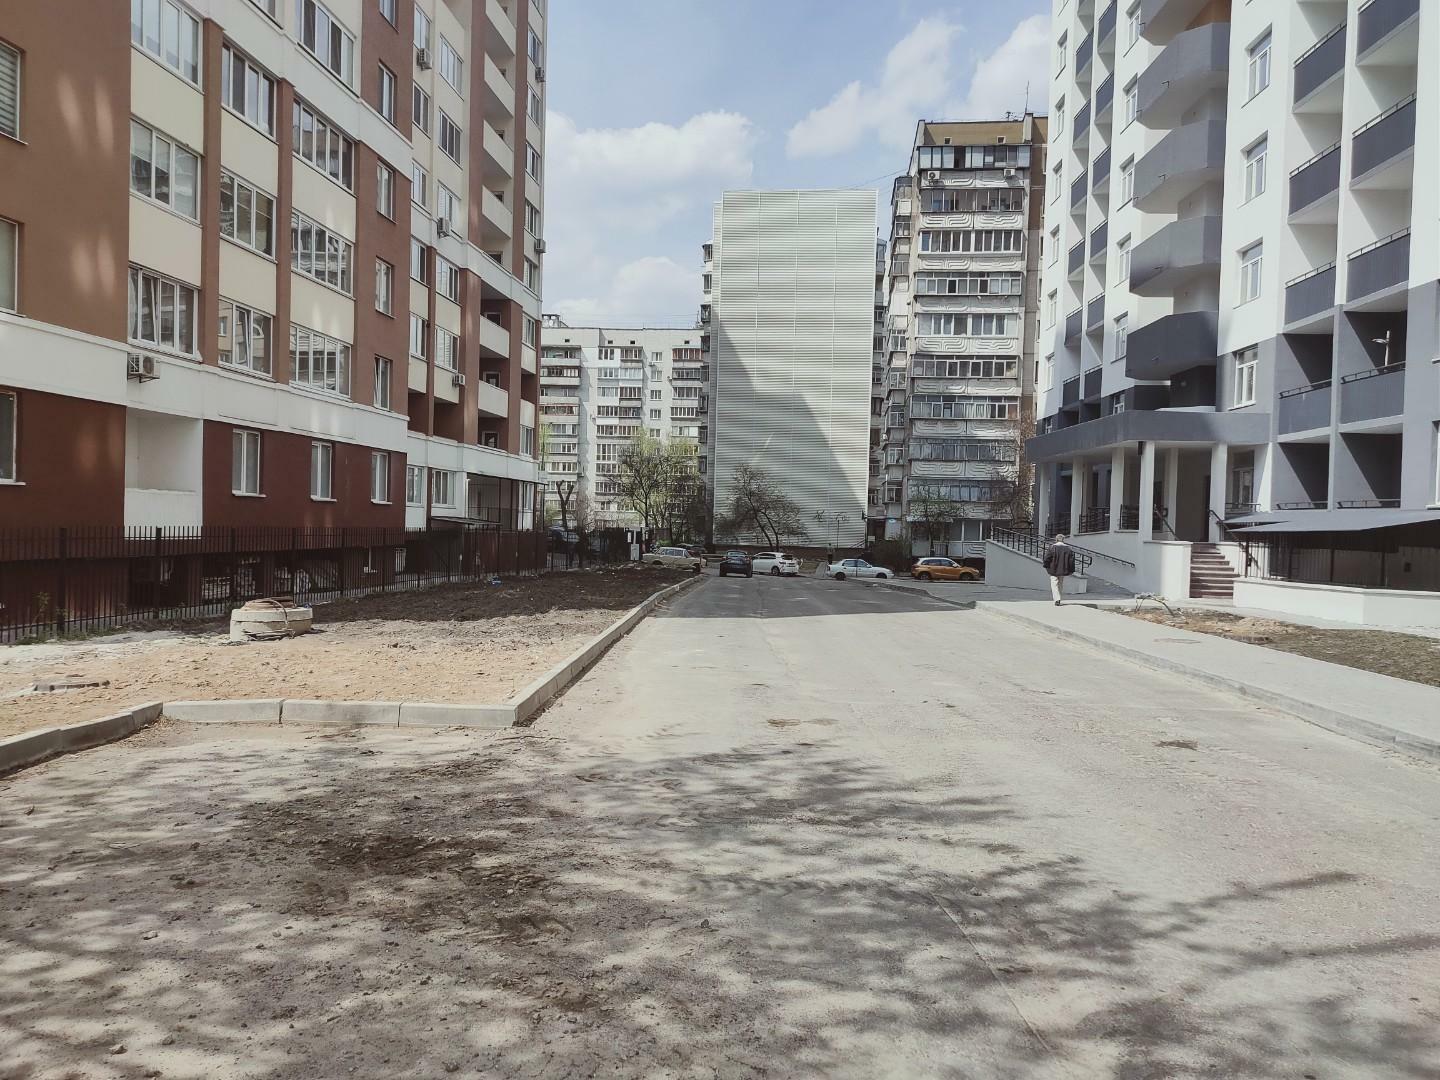 Ход строительства ЖК на ул. Симона Петлюры, 21б, апр, 2021 год